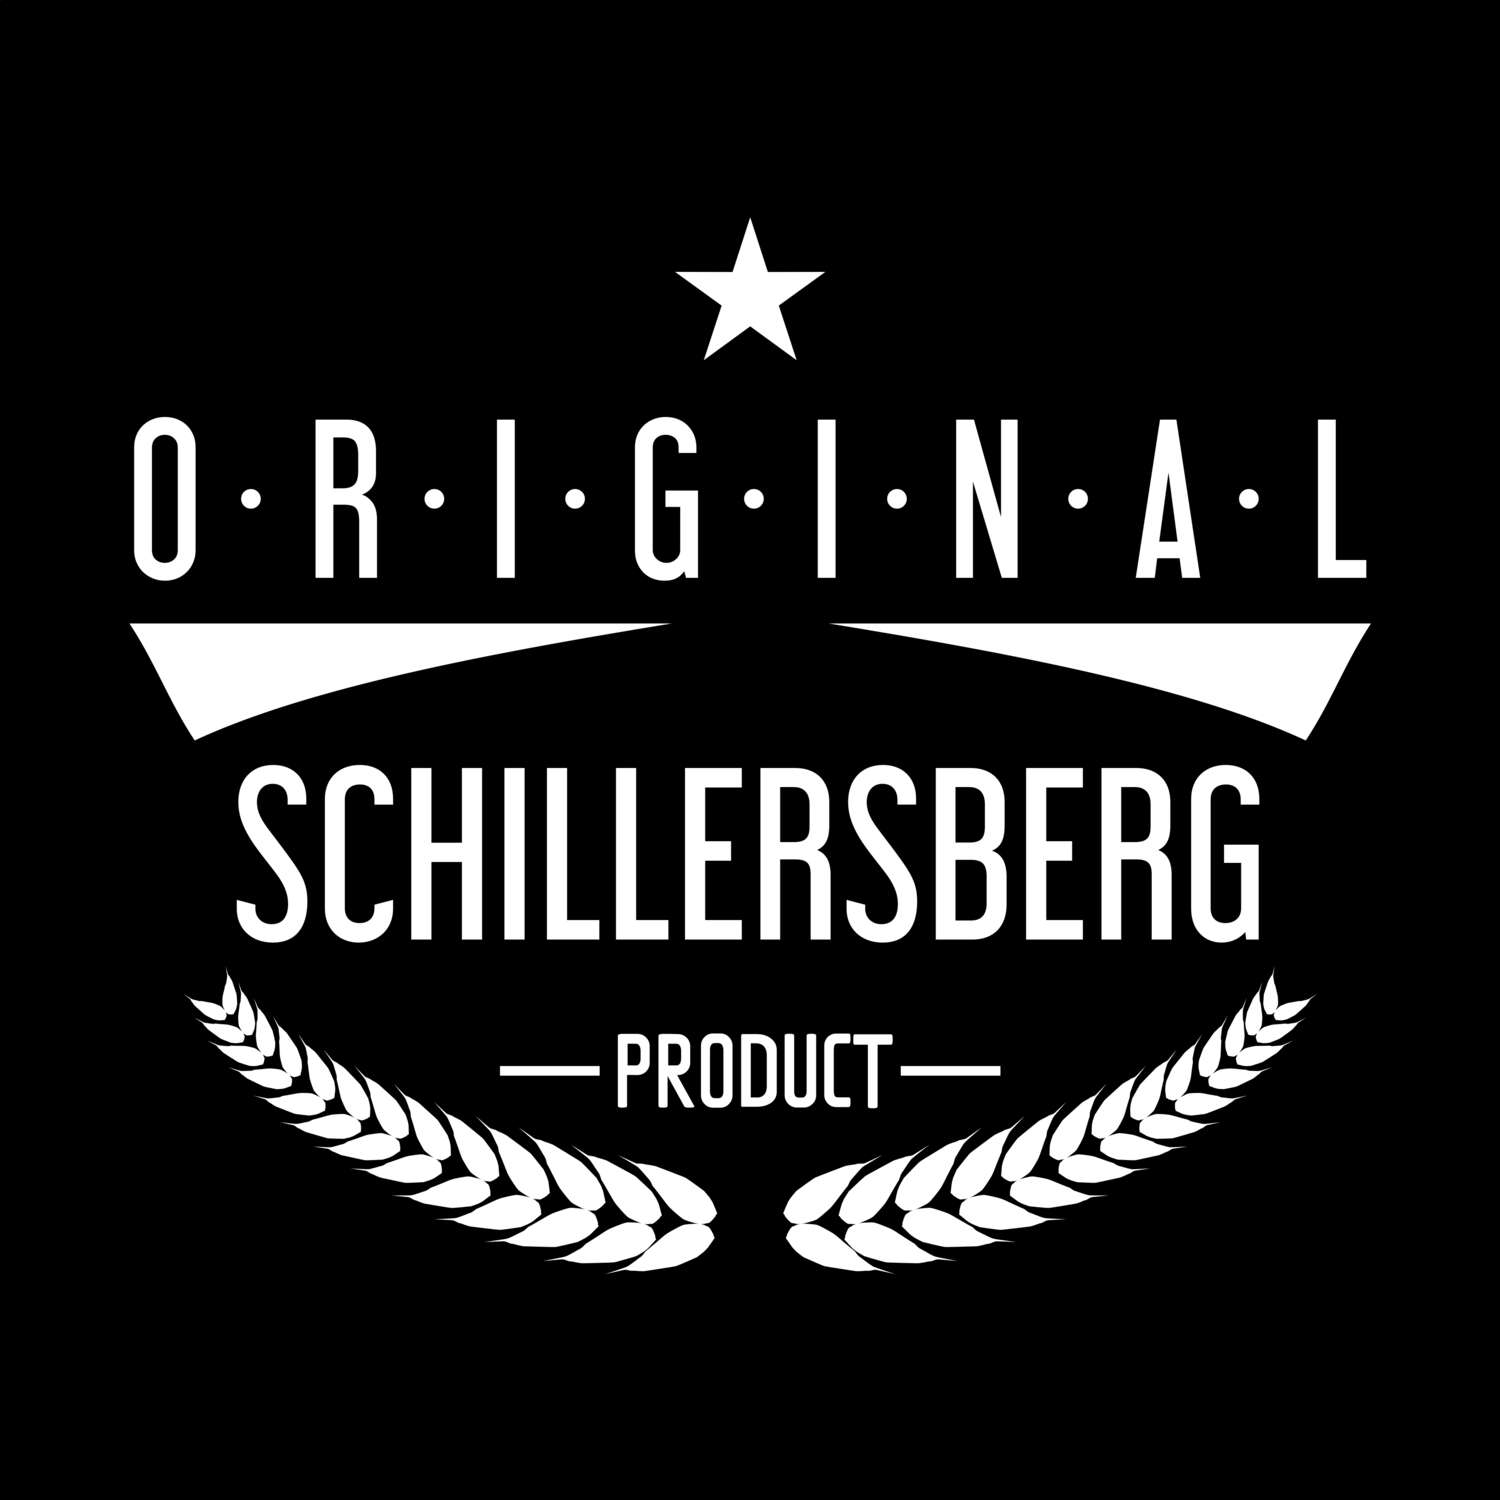 Schillersberg T-Shirt »Original Product«